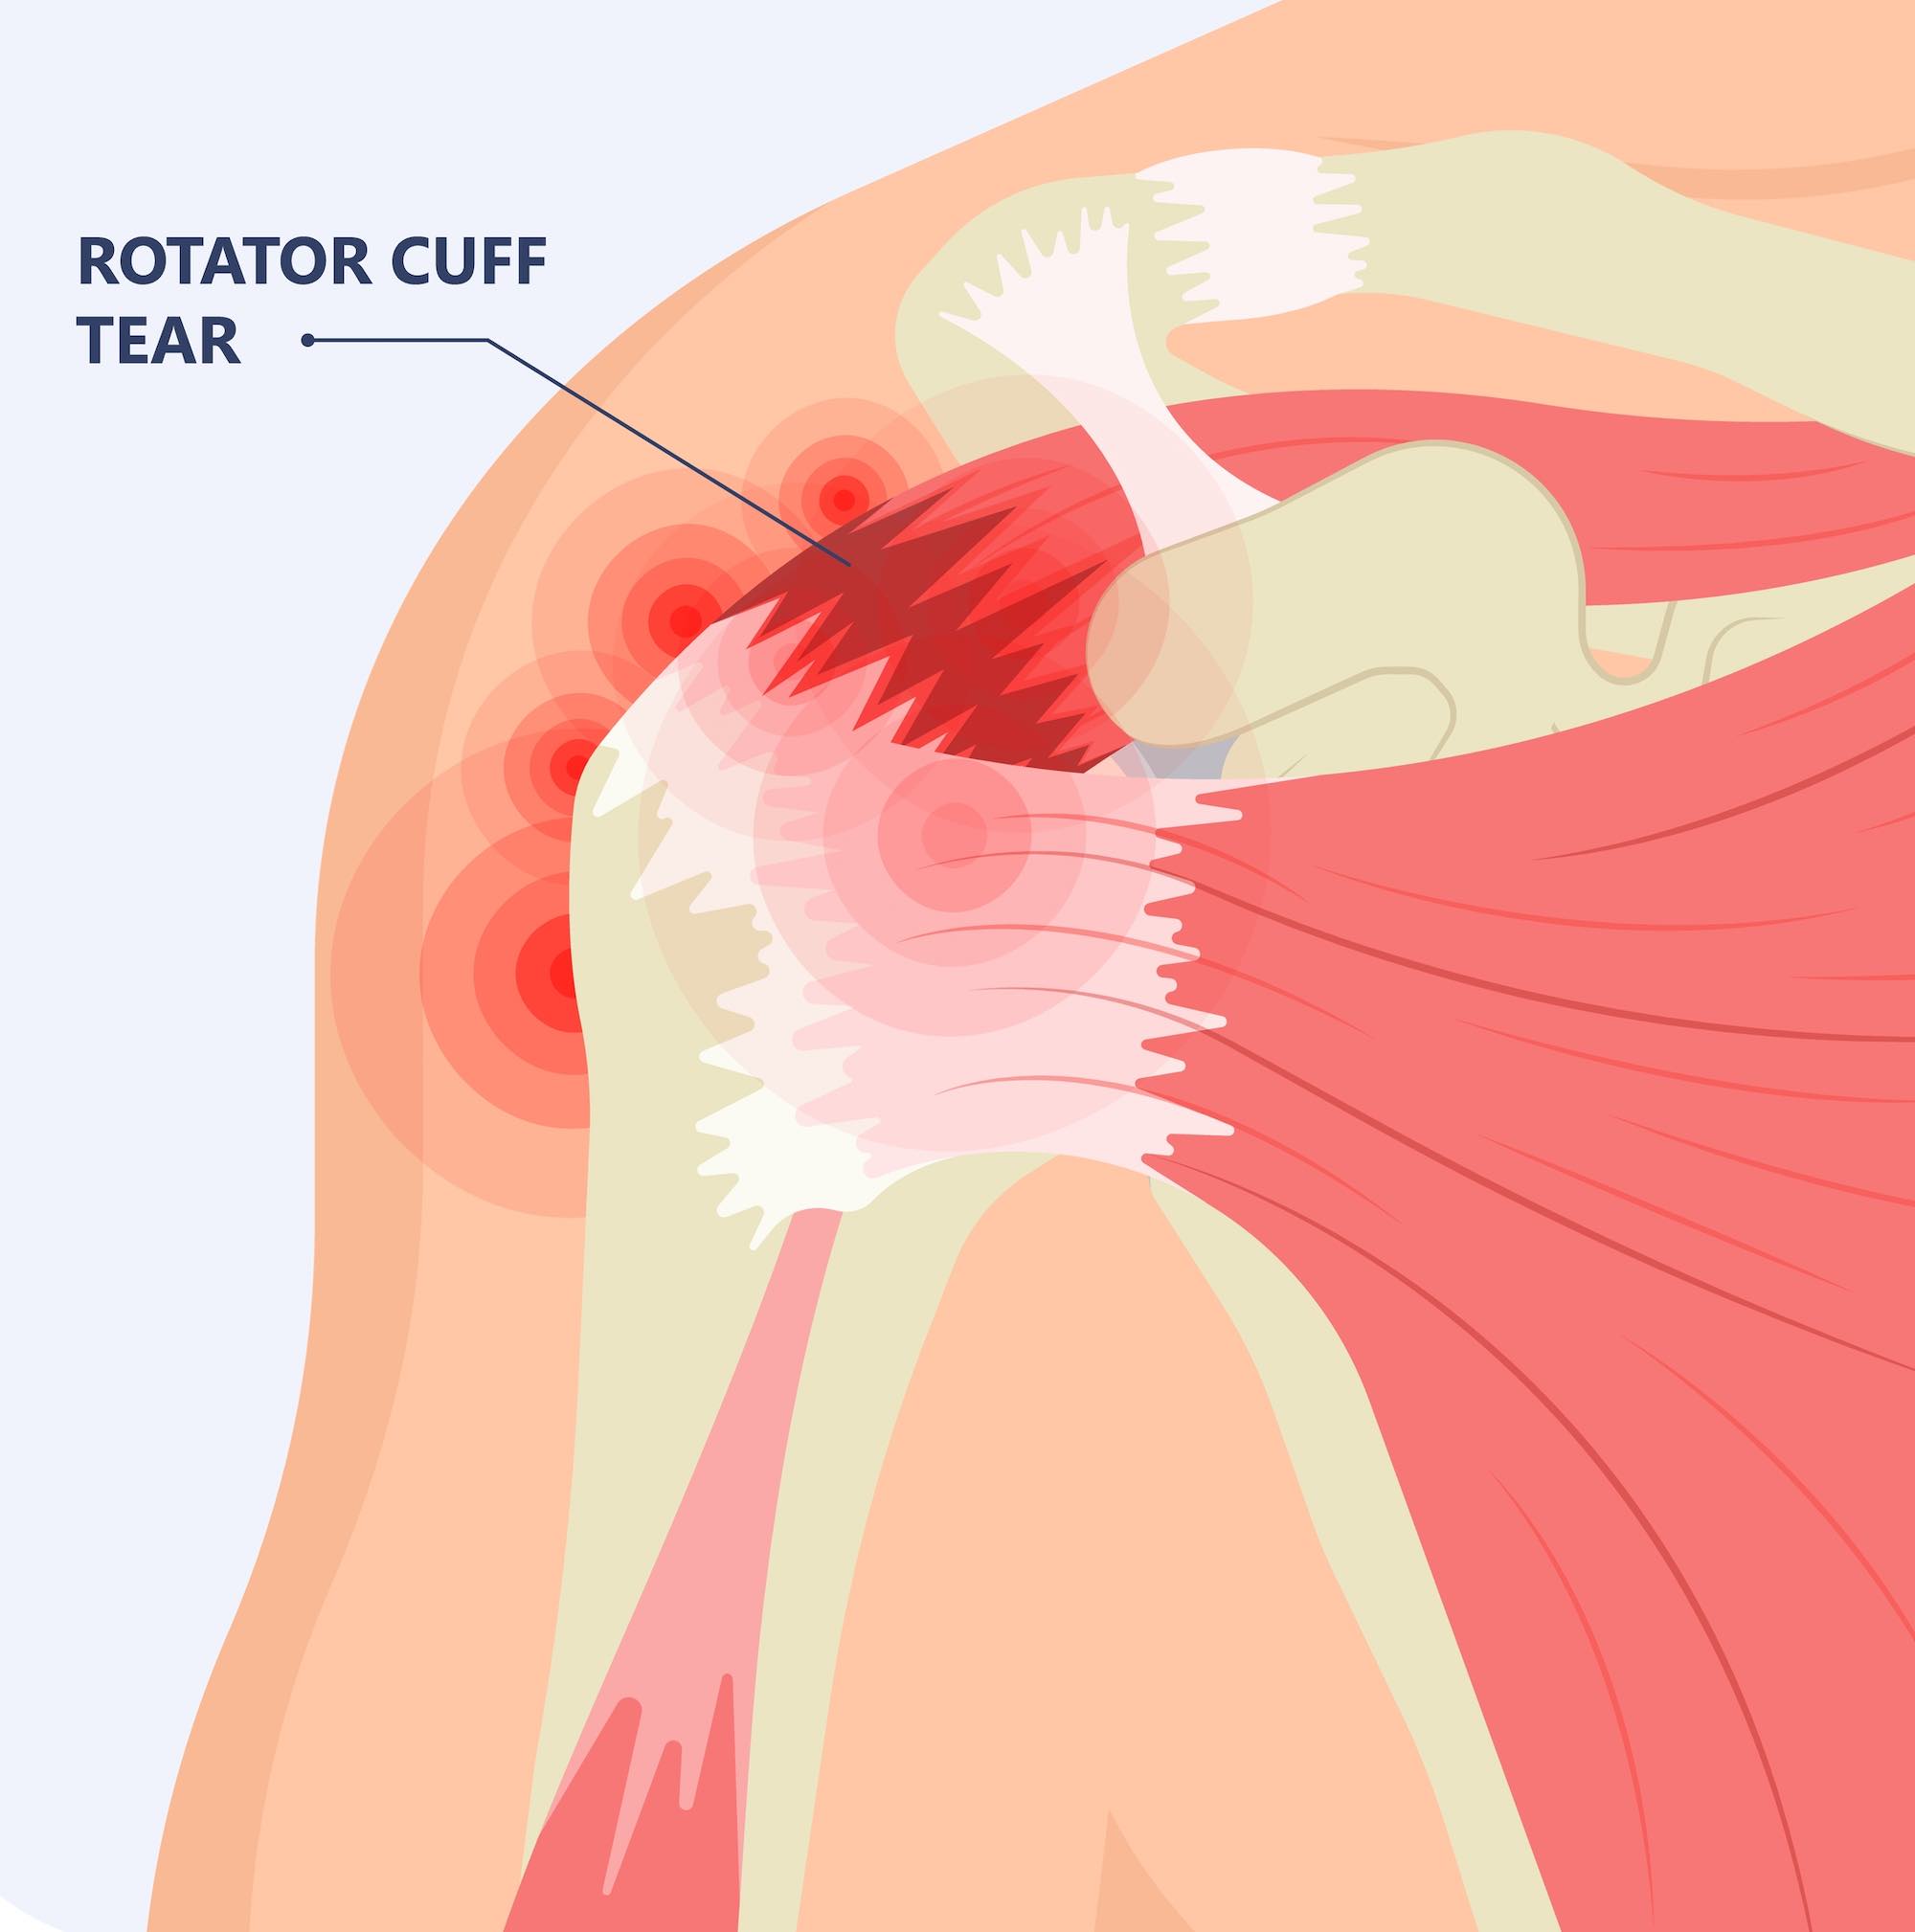 Signs of a Rotator Cuff Tear